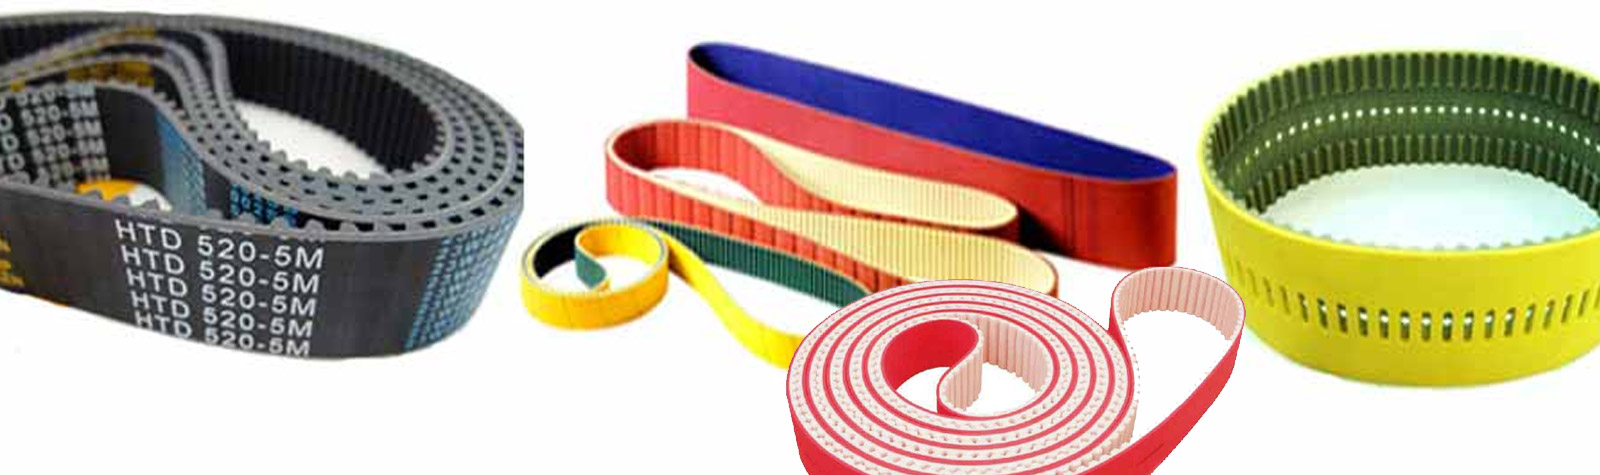 Industrial Belts, Coated Belts Dealers Mumbai, Rubber Coated PU